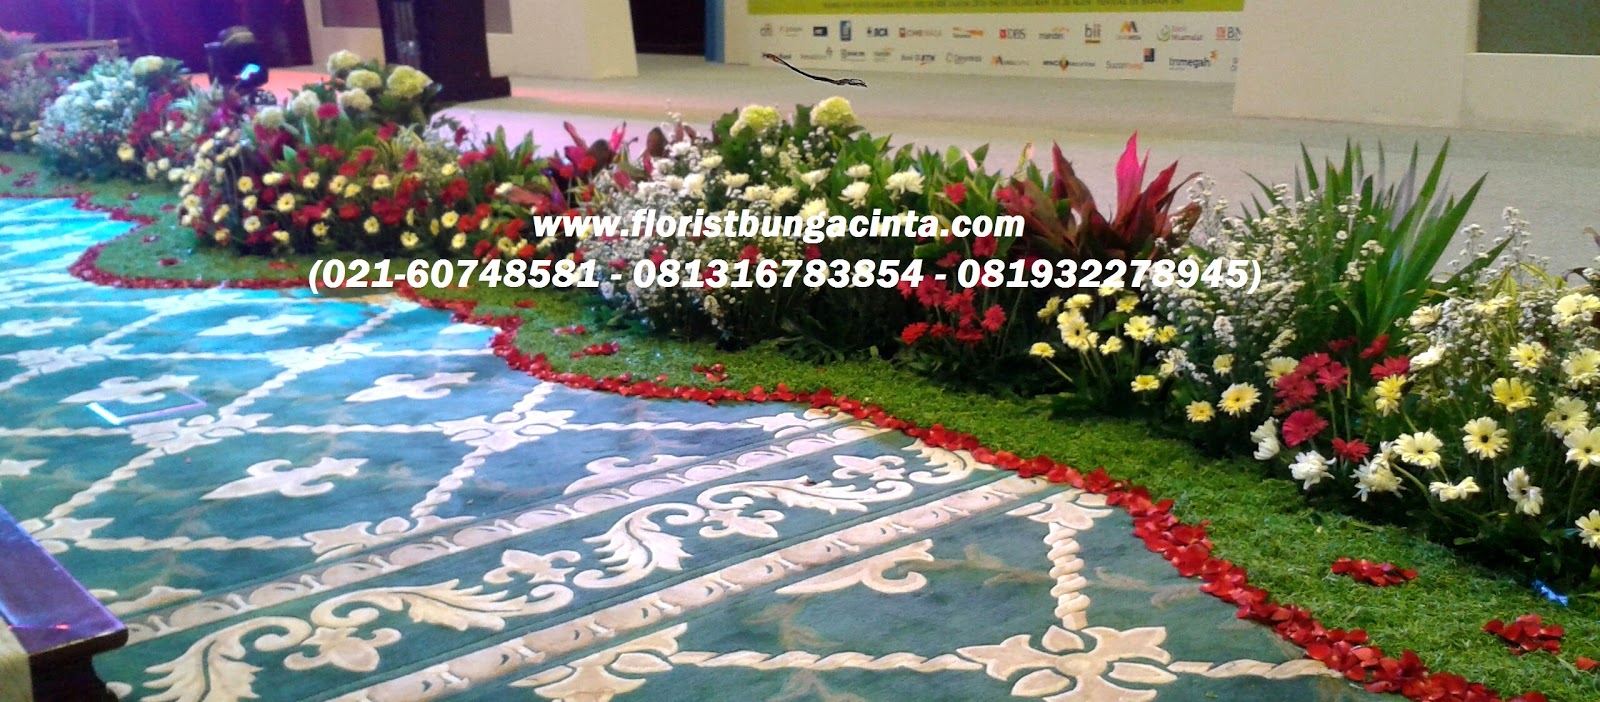 Rusty Florist Jakarta - Online Flower Shop: Dekorasi Bunga Taman Murah